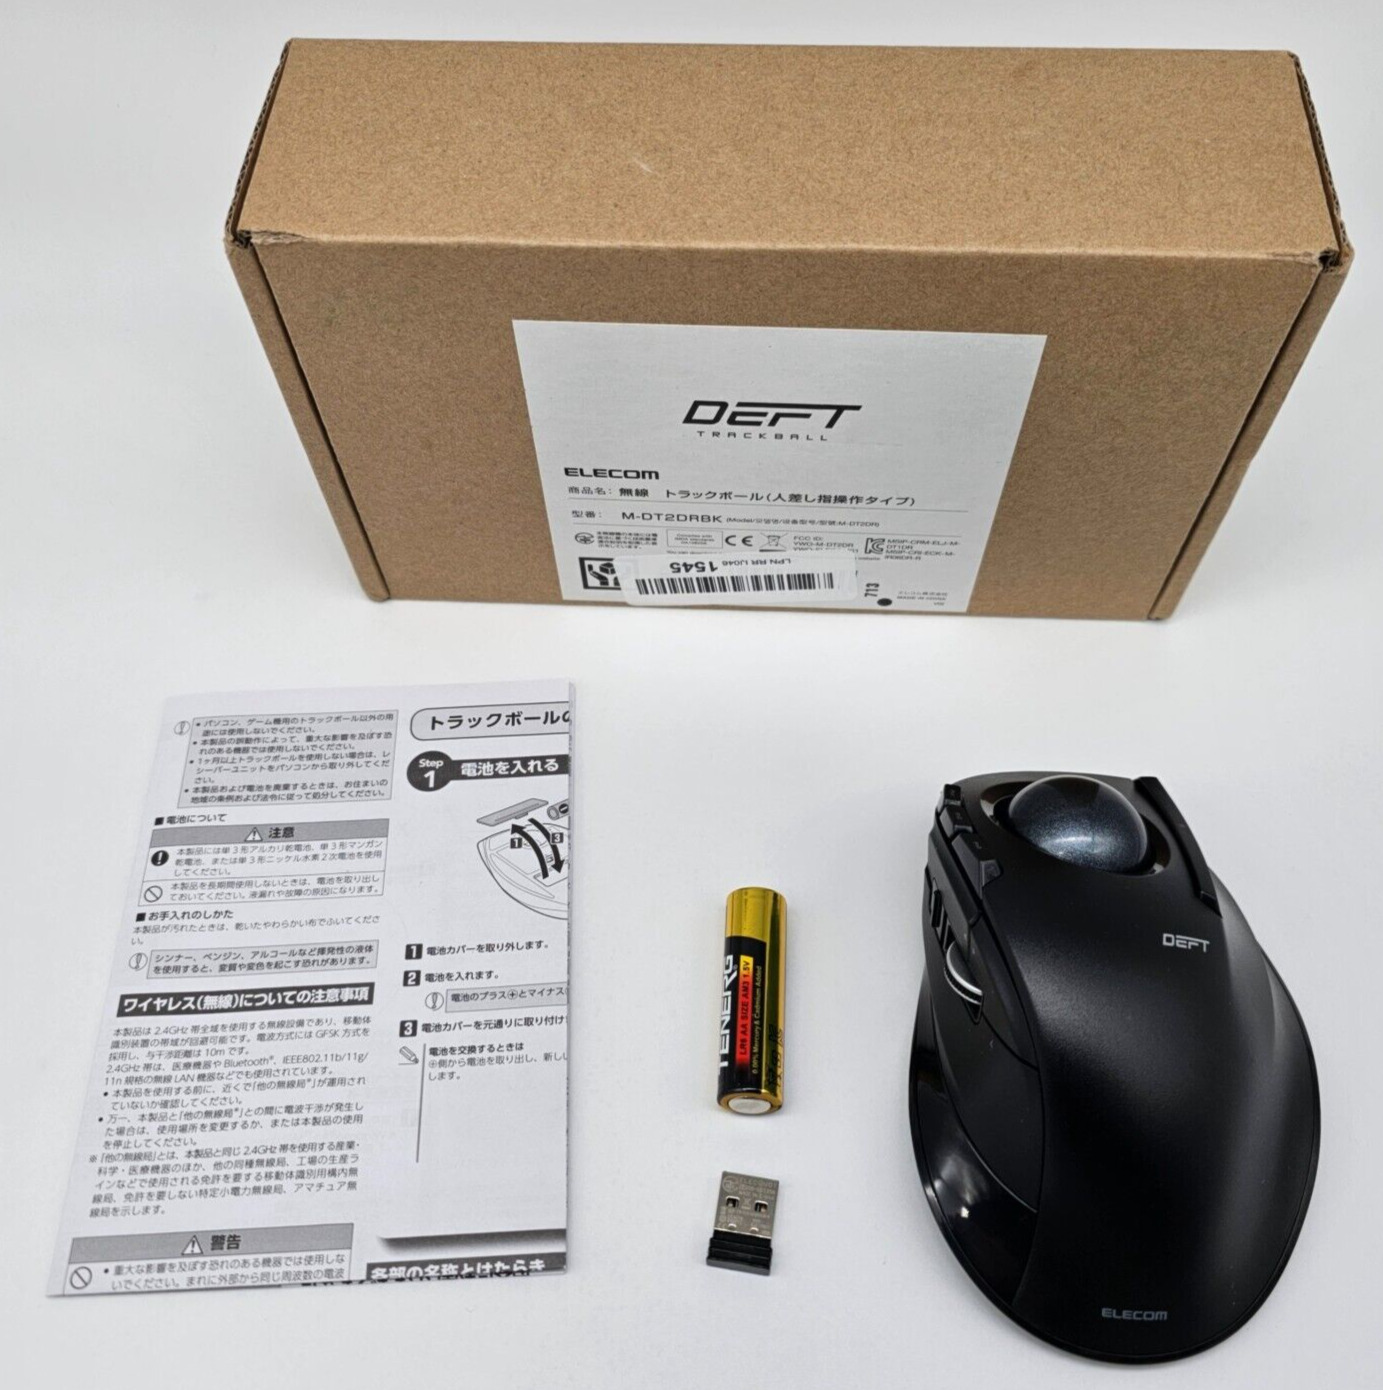 Elecom DEFT Track Ball Mouse M-DT2DRBK Wireless Black 8 Button Programmable